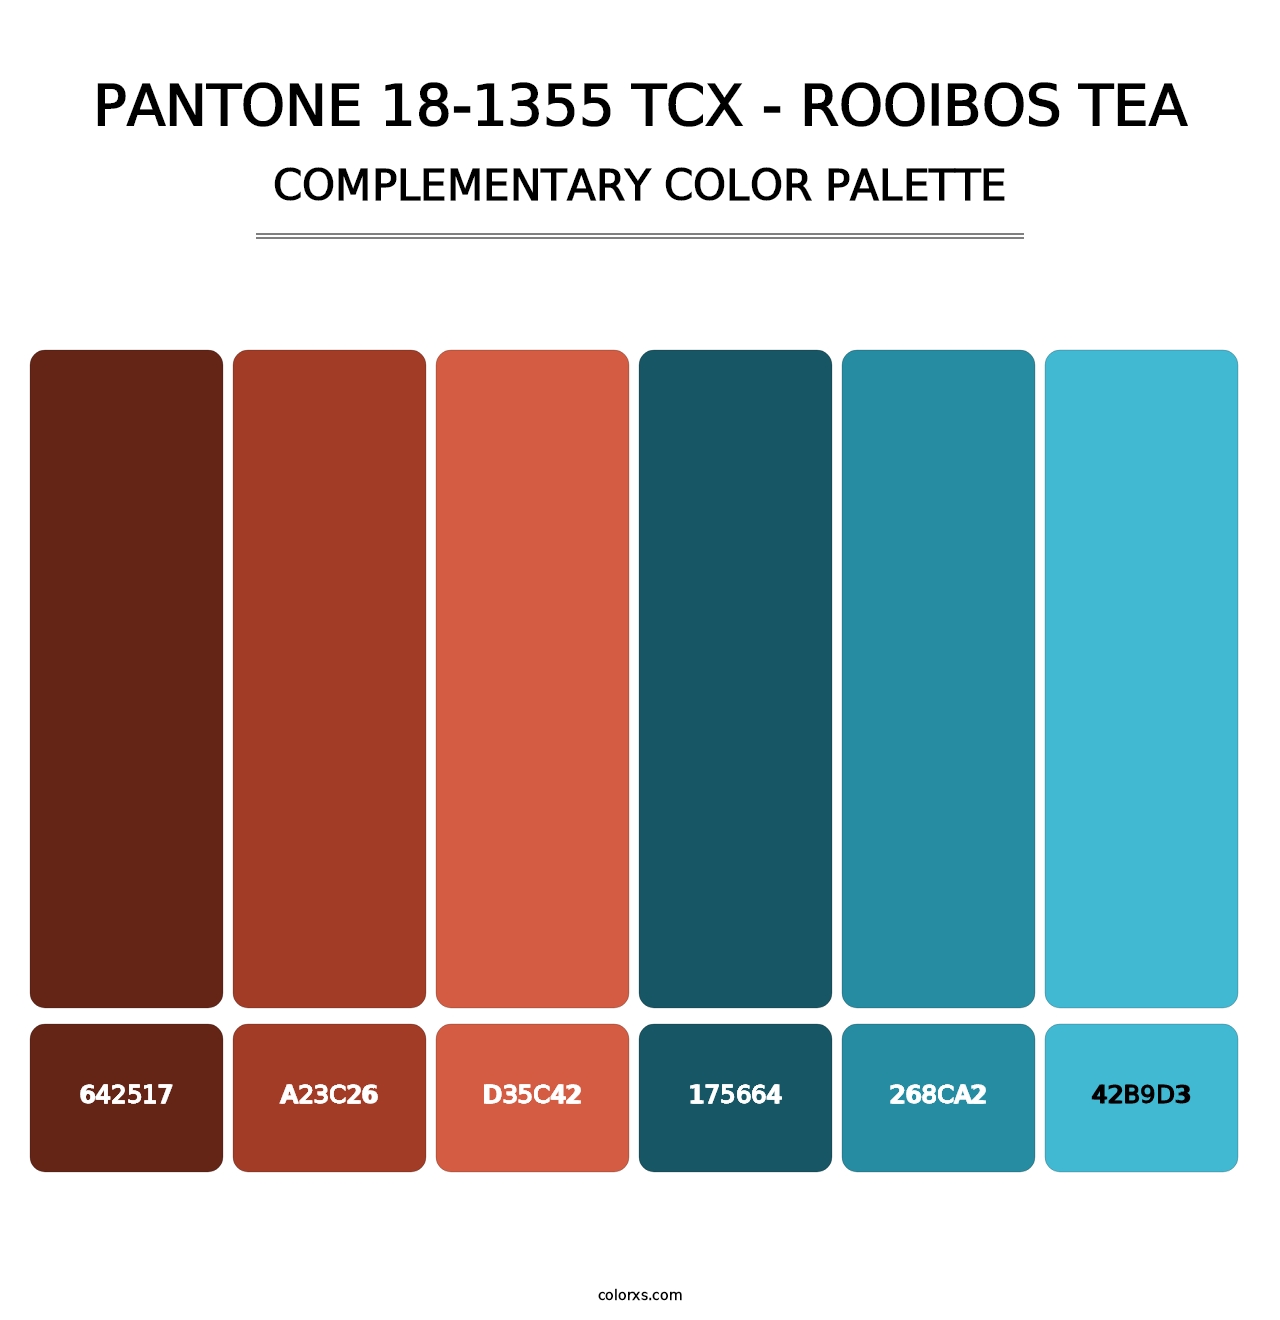 PANTONE 18-1355 TCX - Rooibos Tea - Complementary Color Palette